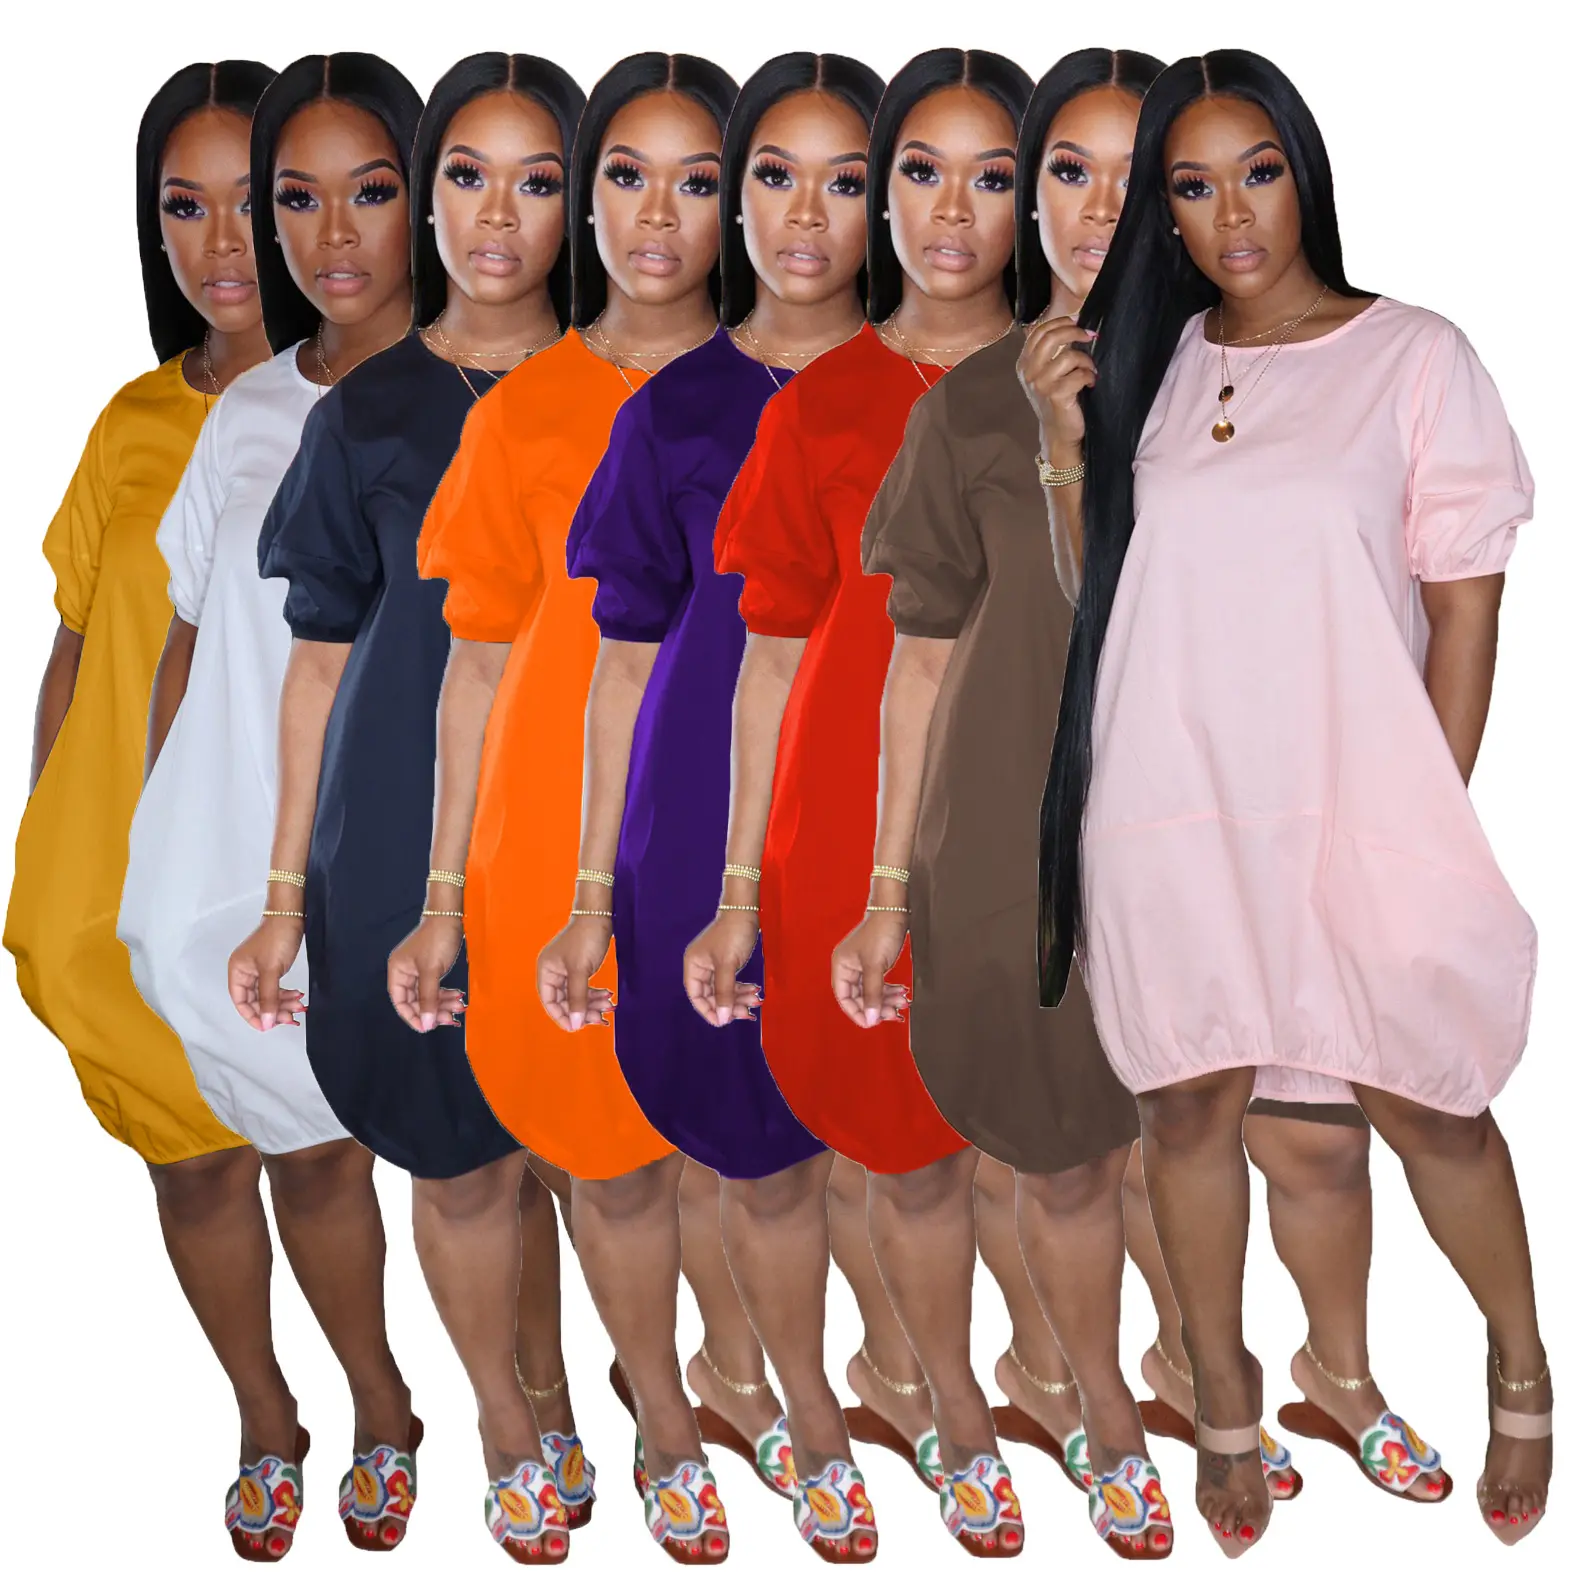 DL8076 Women's Clothing Fashion Street Wear Plus Size New Solid Color Casual Bubble Dress Women Summer Dresses